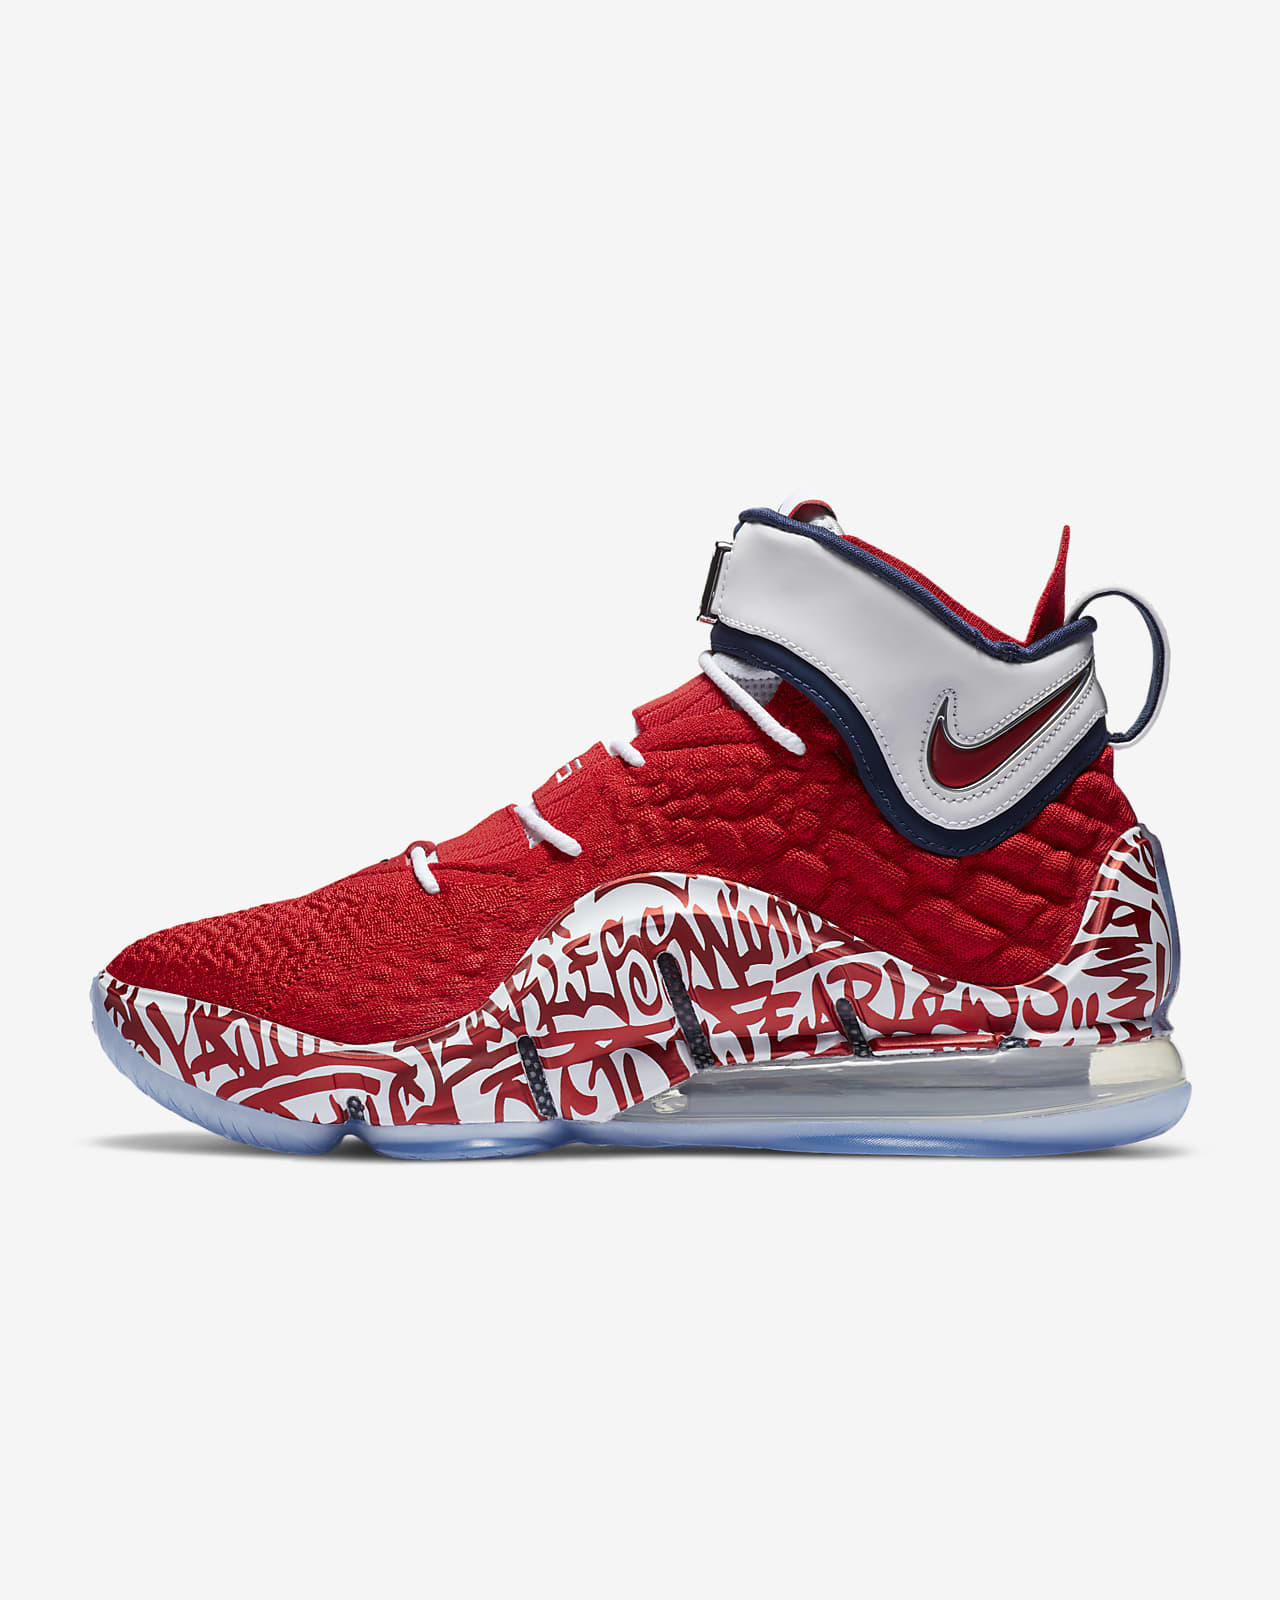 LeBron 17 'Fire Red' Basketball Shoe 